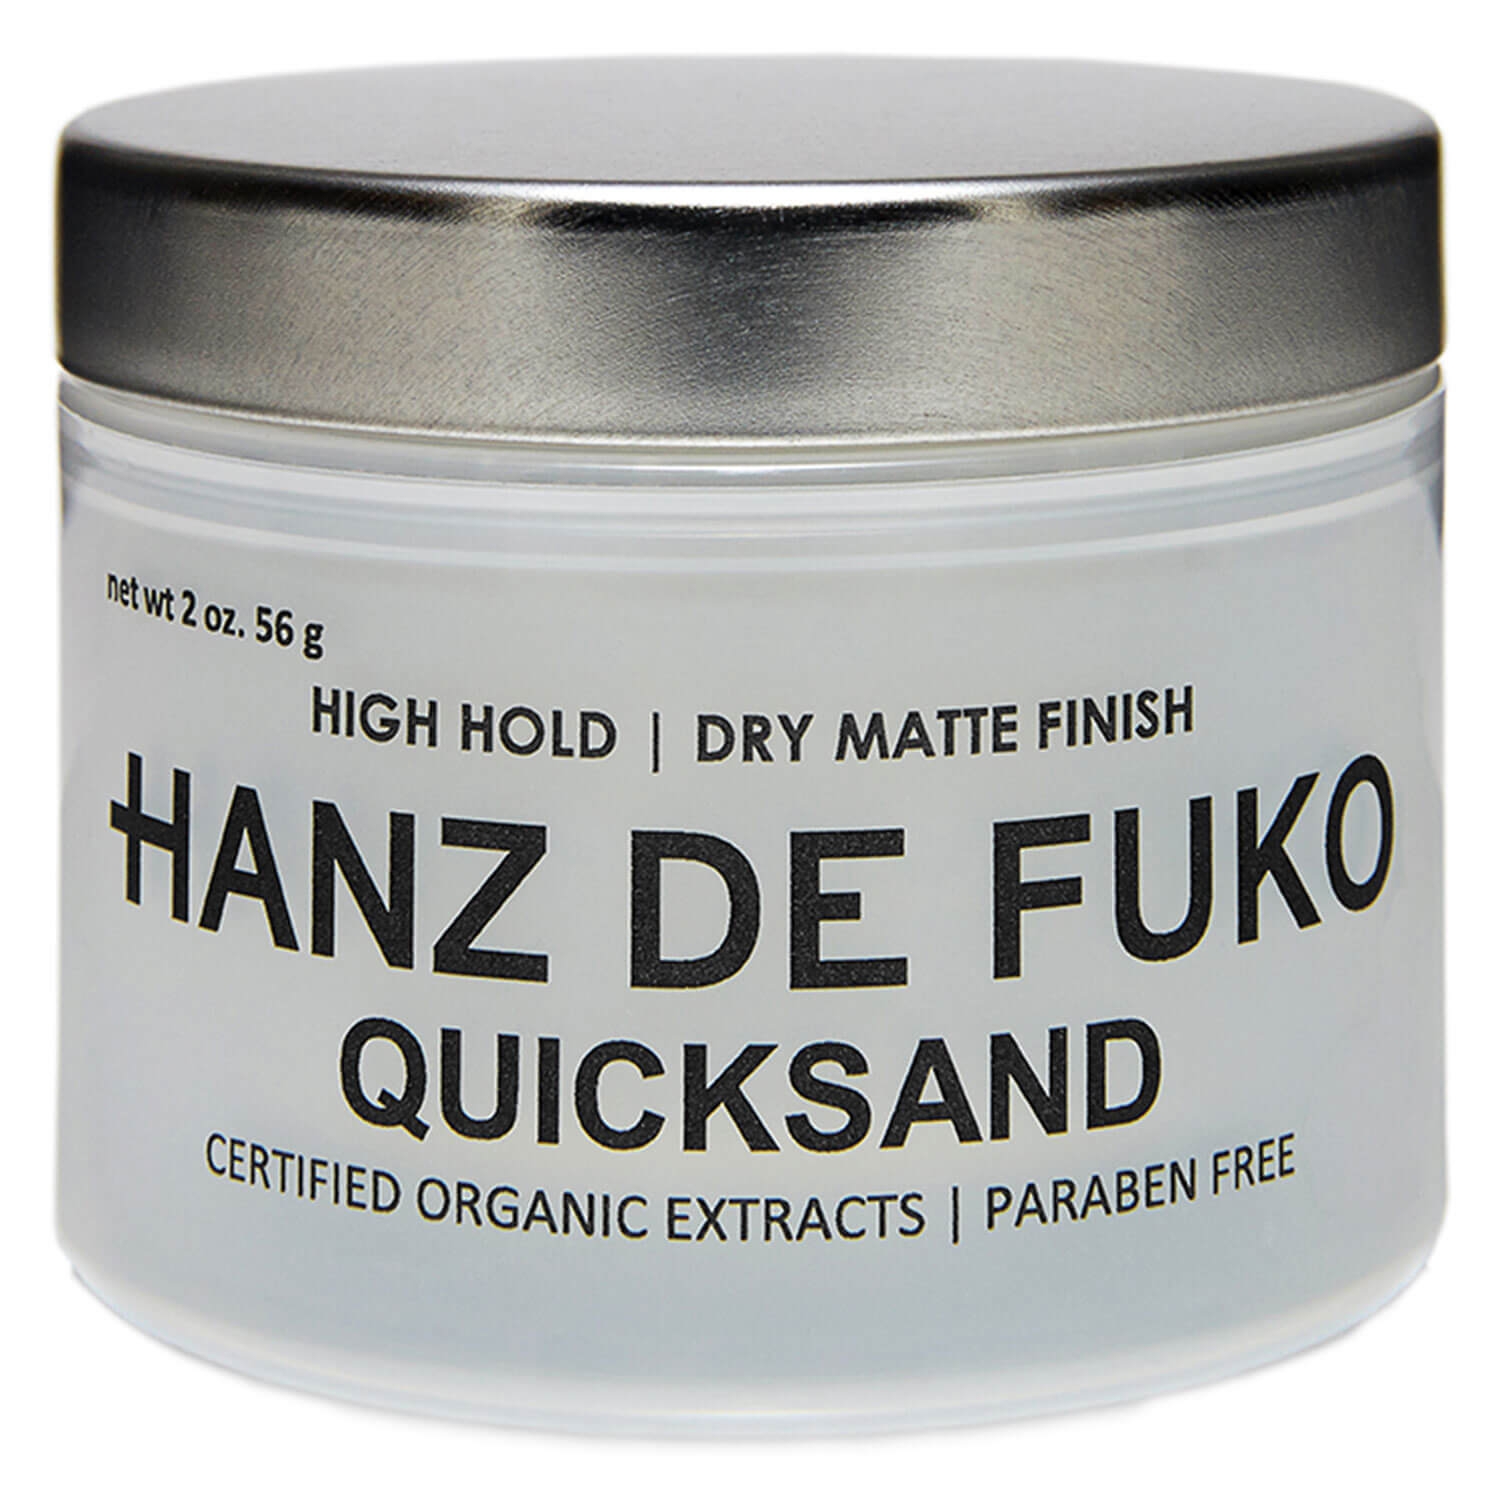 Image du produit de HANZ DE FUKO - Quicksand